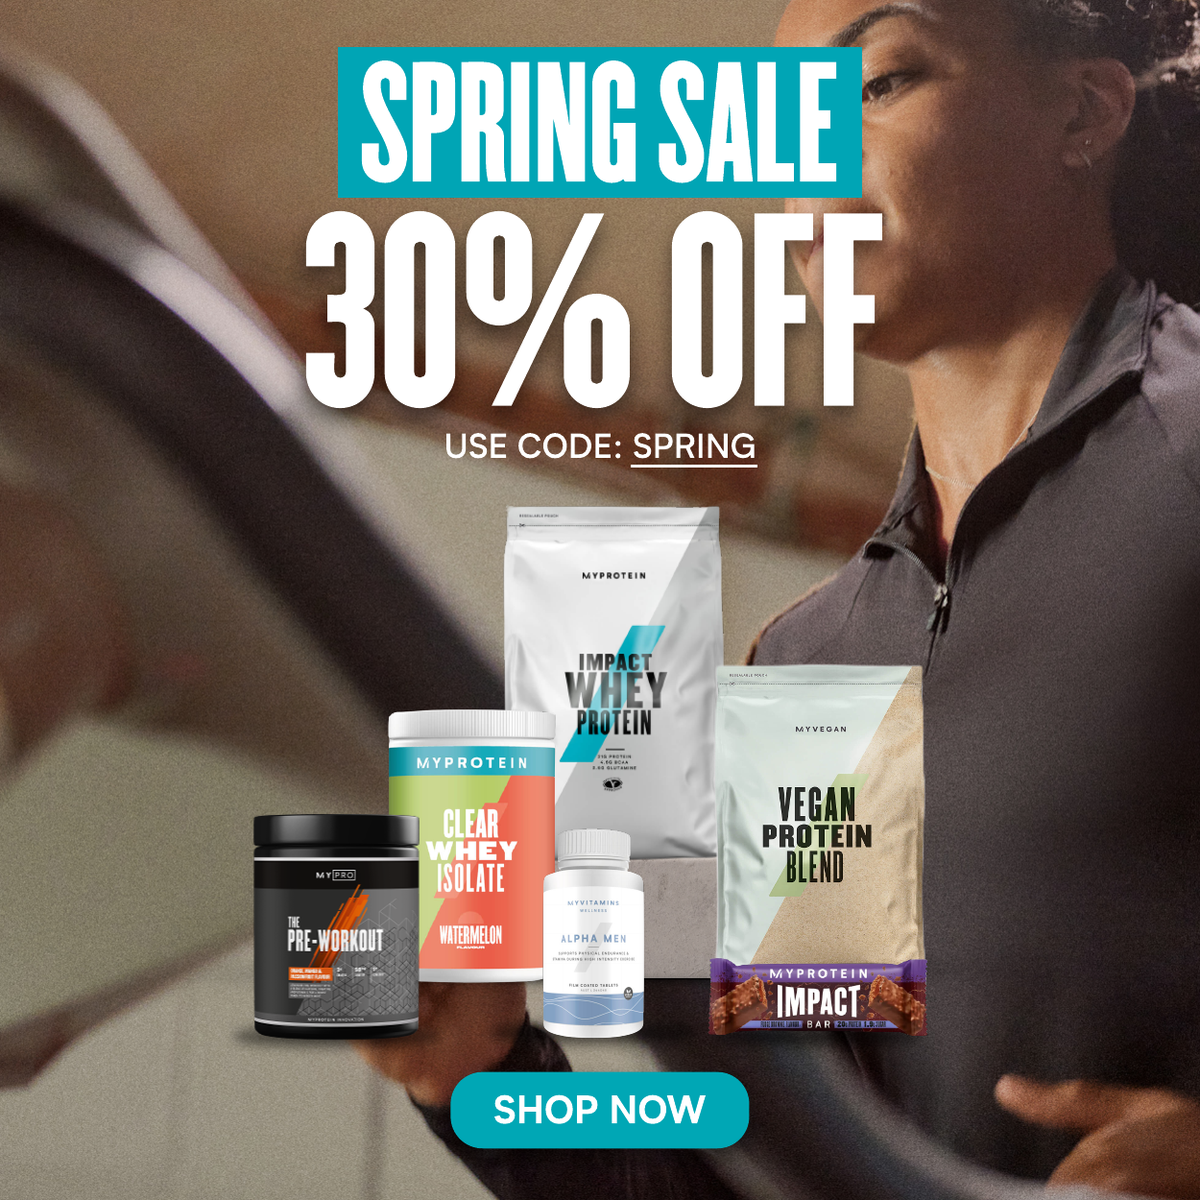 Spring Sale - 30% off use code: SPRING